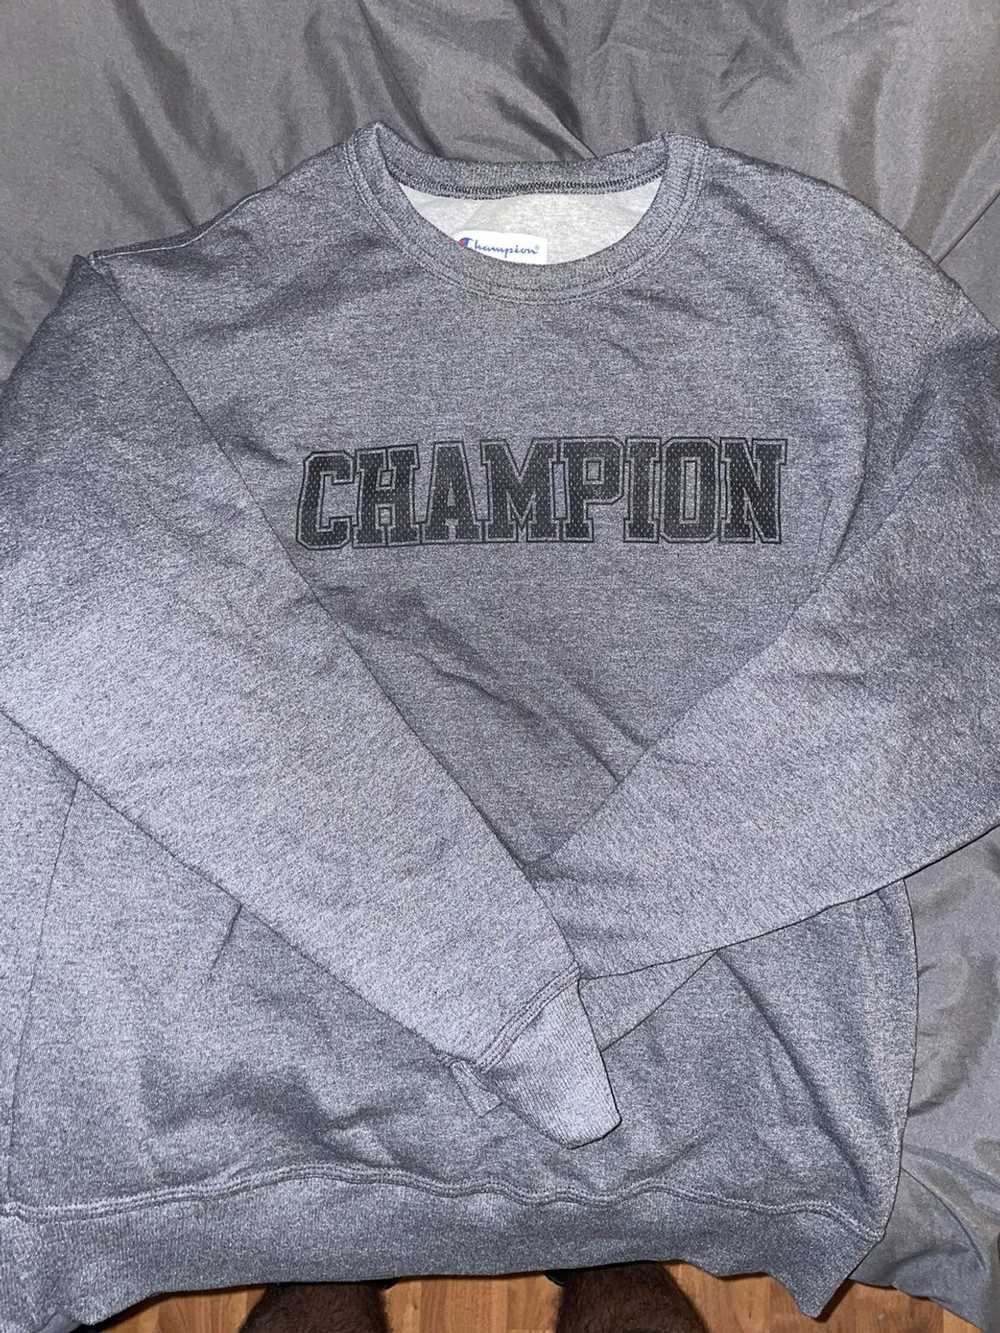 Champion Vintage Champion Sweater. - image 1